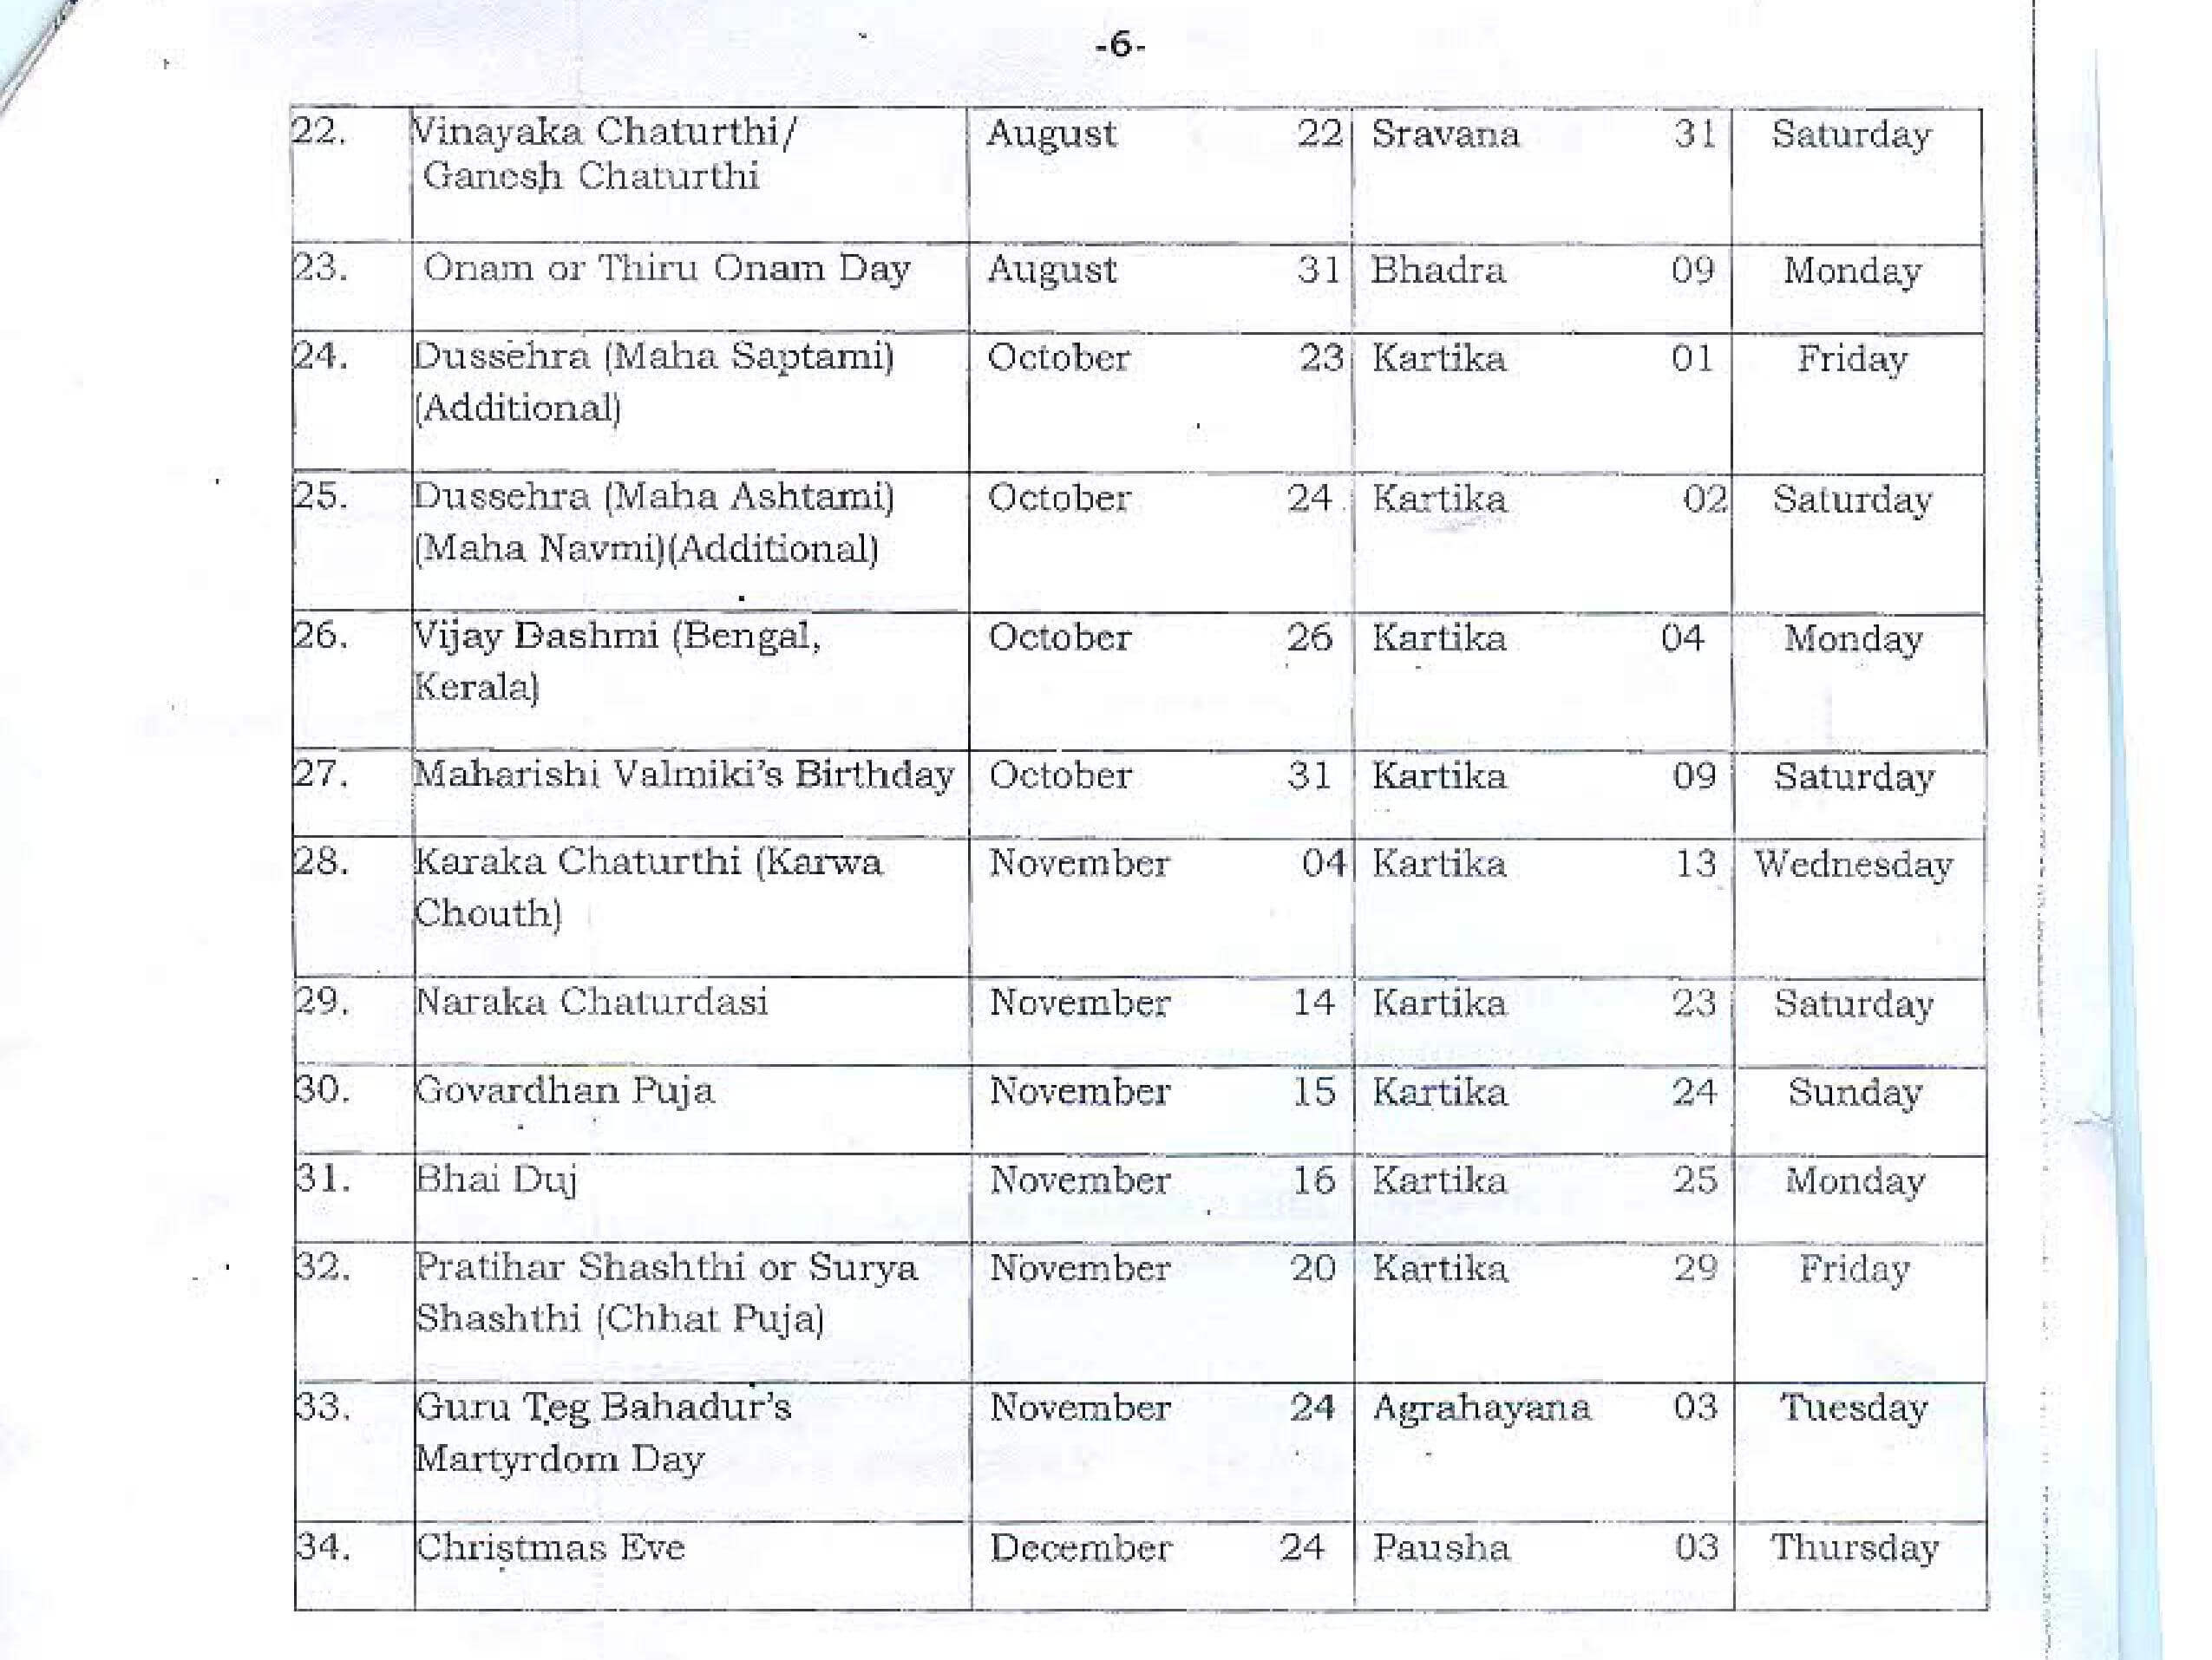 Bsnl Holidays List 2020 | Gazetted And Restricted Holidays inside Government Calendar 2020 Bihar